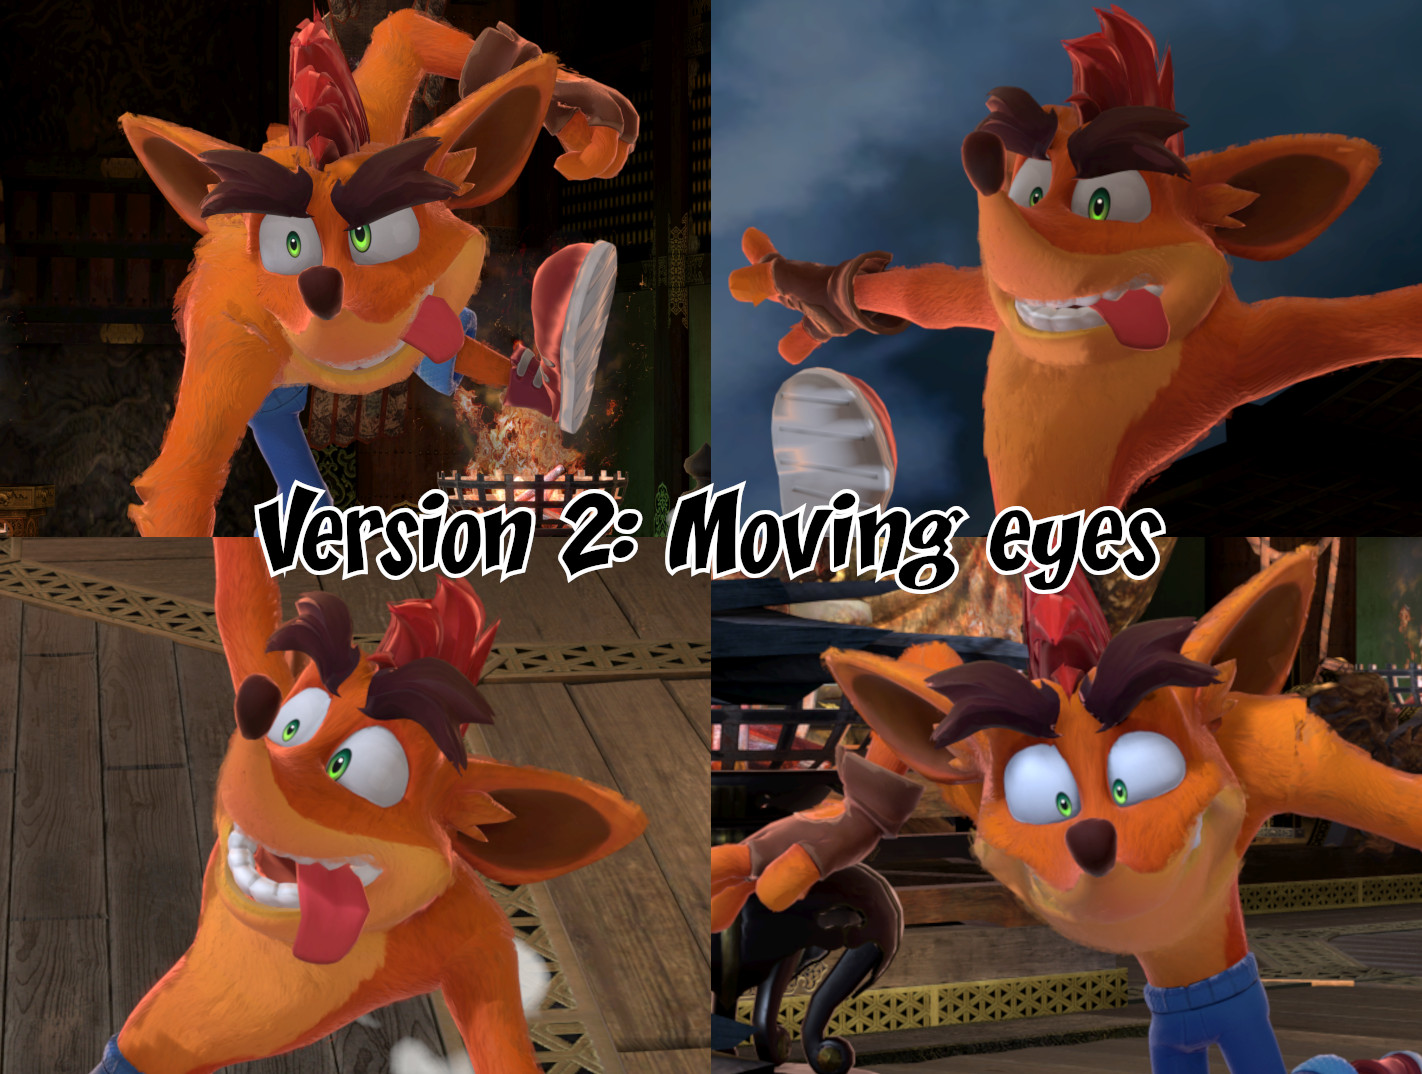 Crash Bandicoot Smash Bros Moveset (Remastered) by